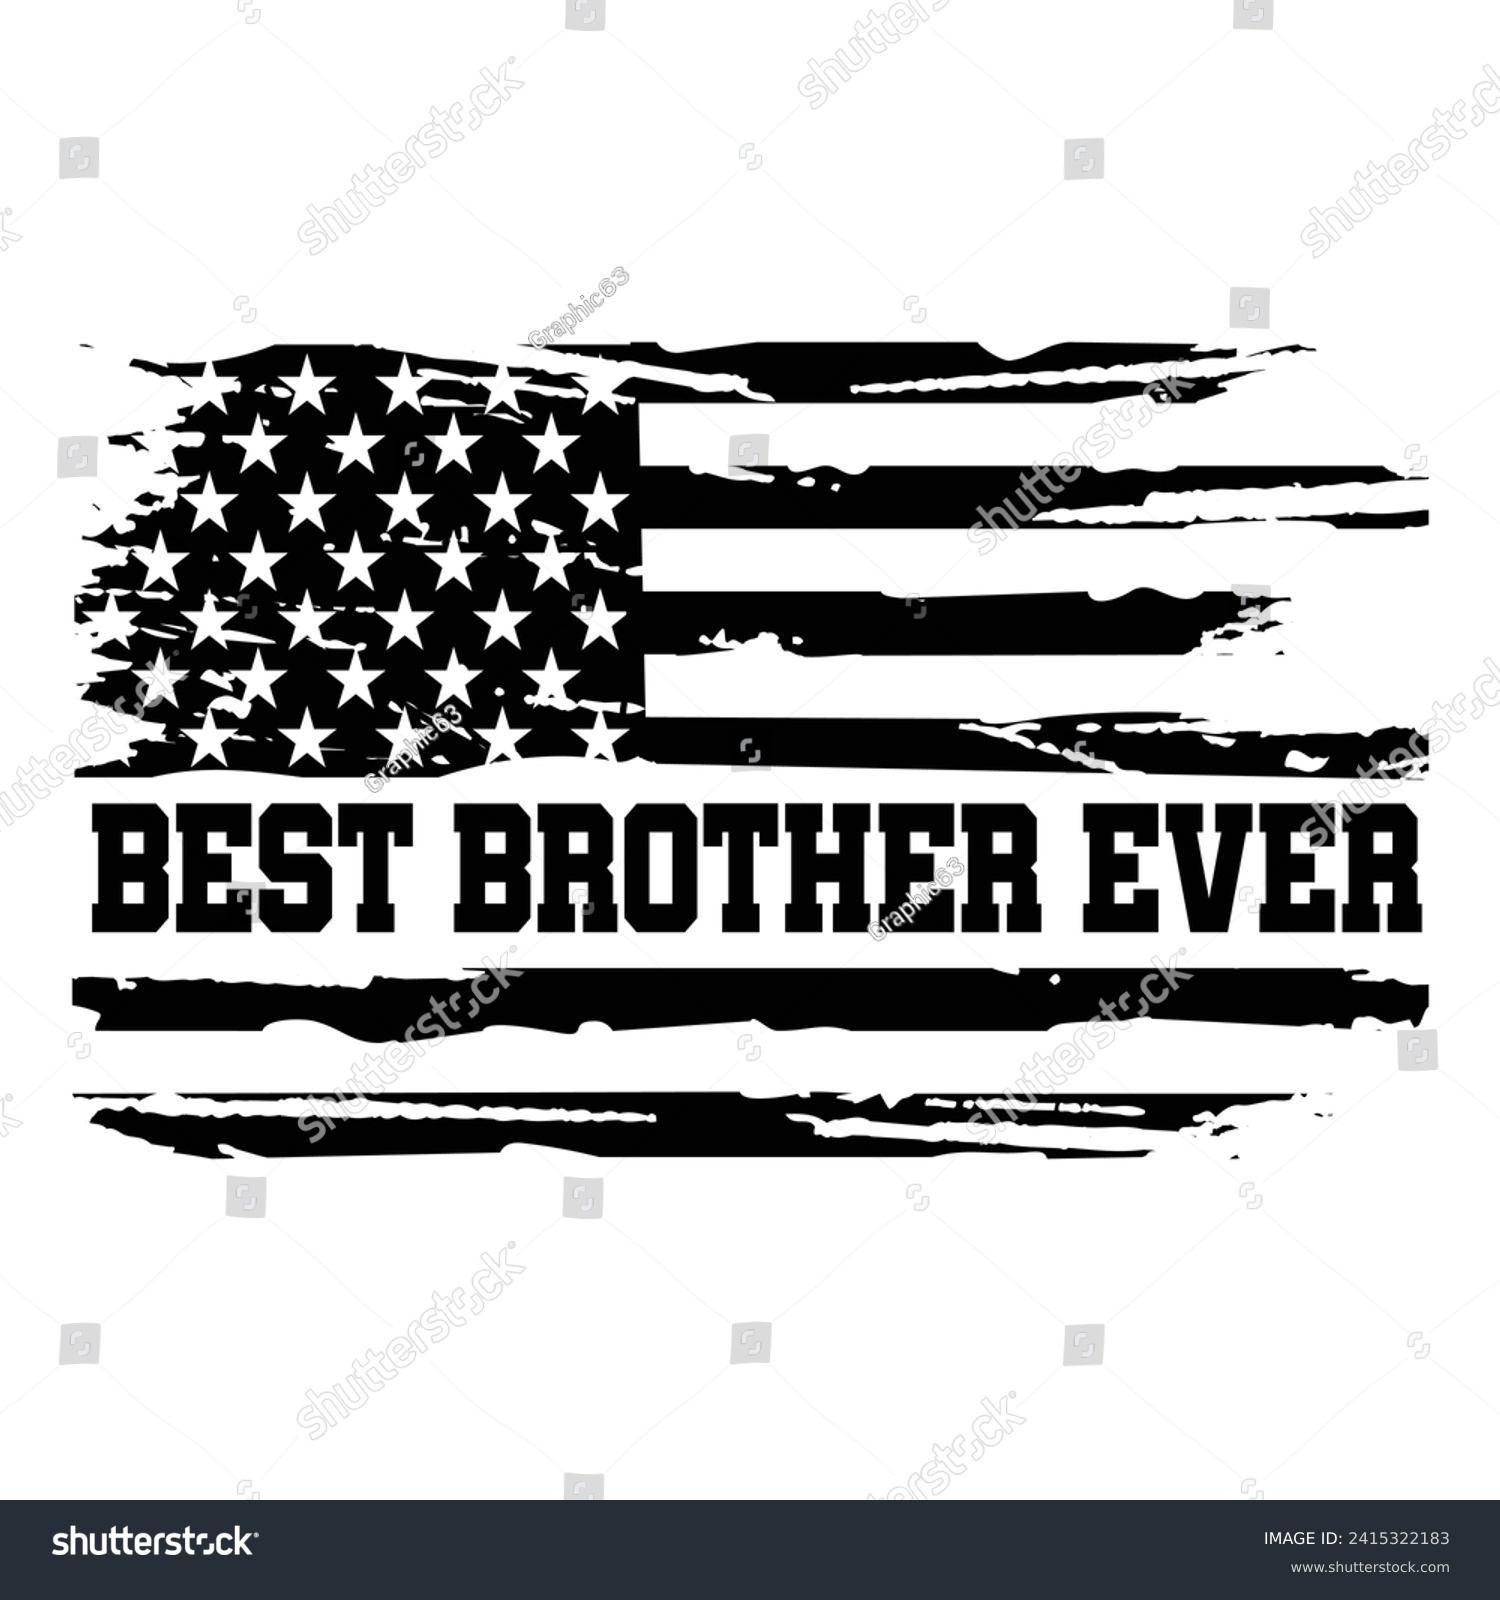 SVG of Distressed Best Brother Ever American Usa Flag New Design For T Shirt Poster Banner Backround Print Vector Eps Illustrations.
 svg